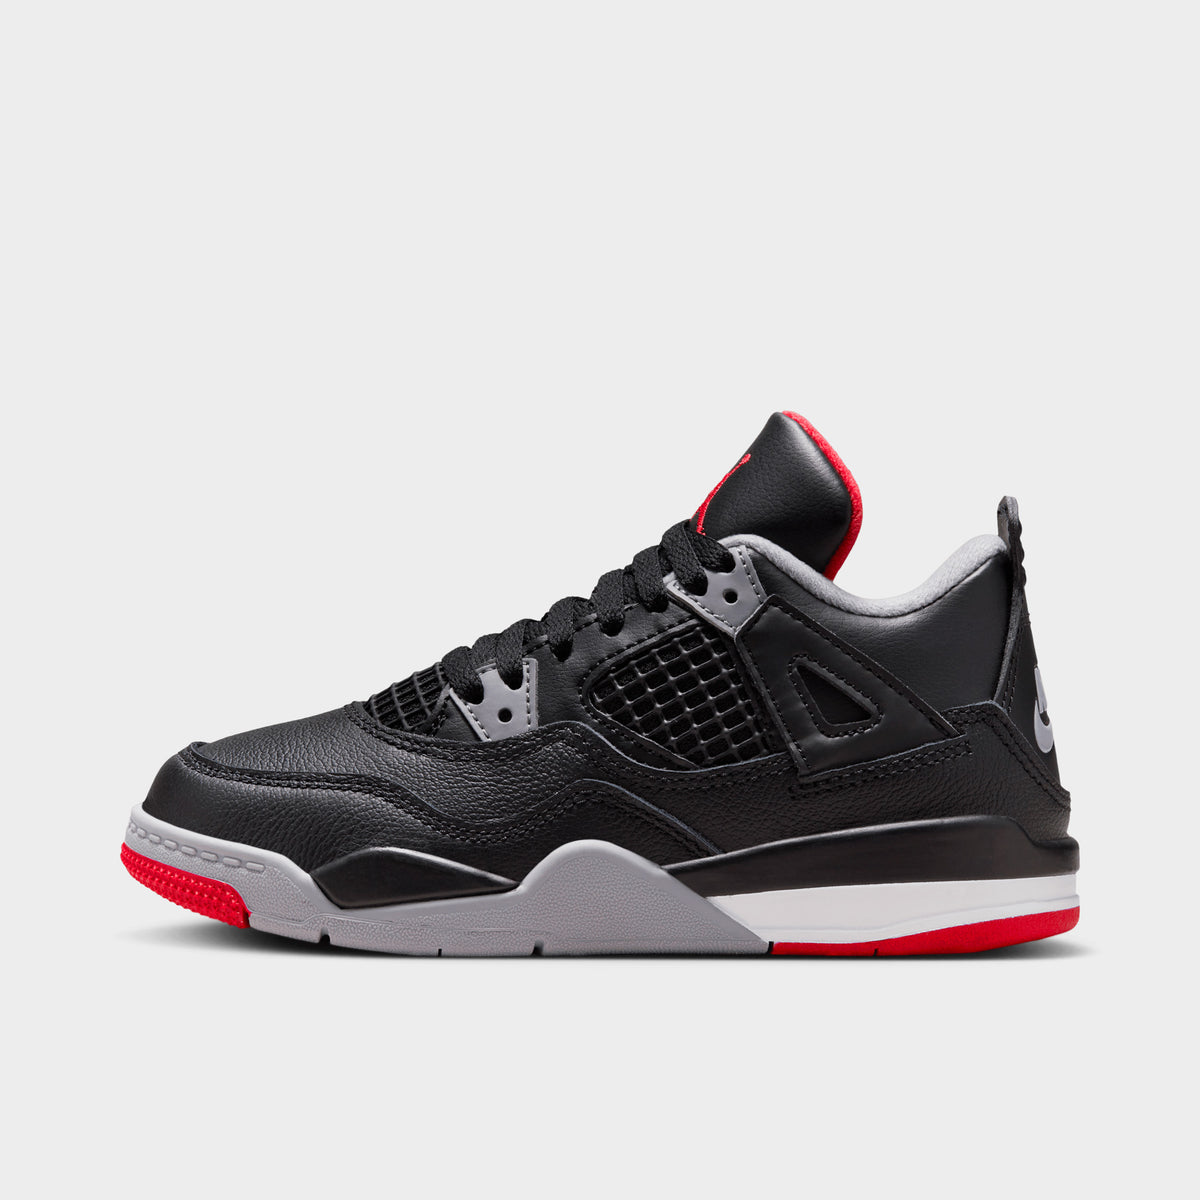 Jordan 4 Retro PS Black / Fire Red - Cement Grey | JD Sports